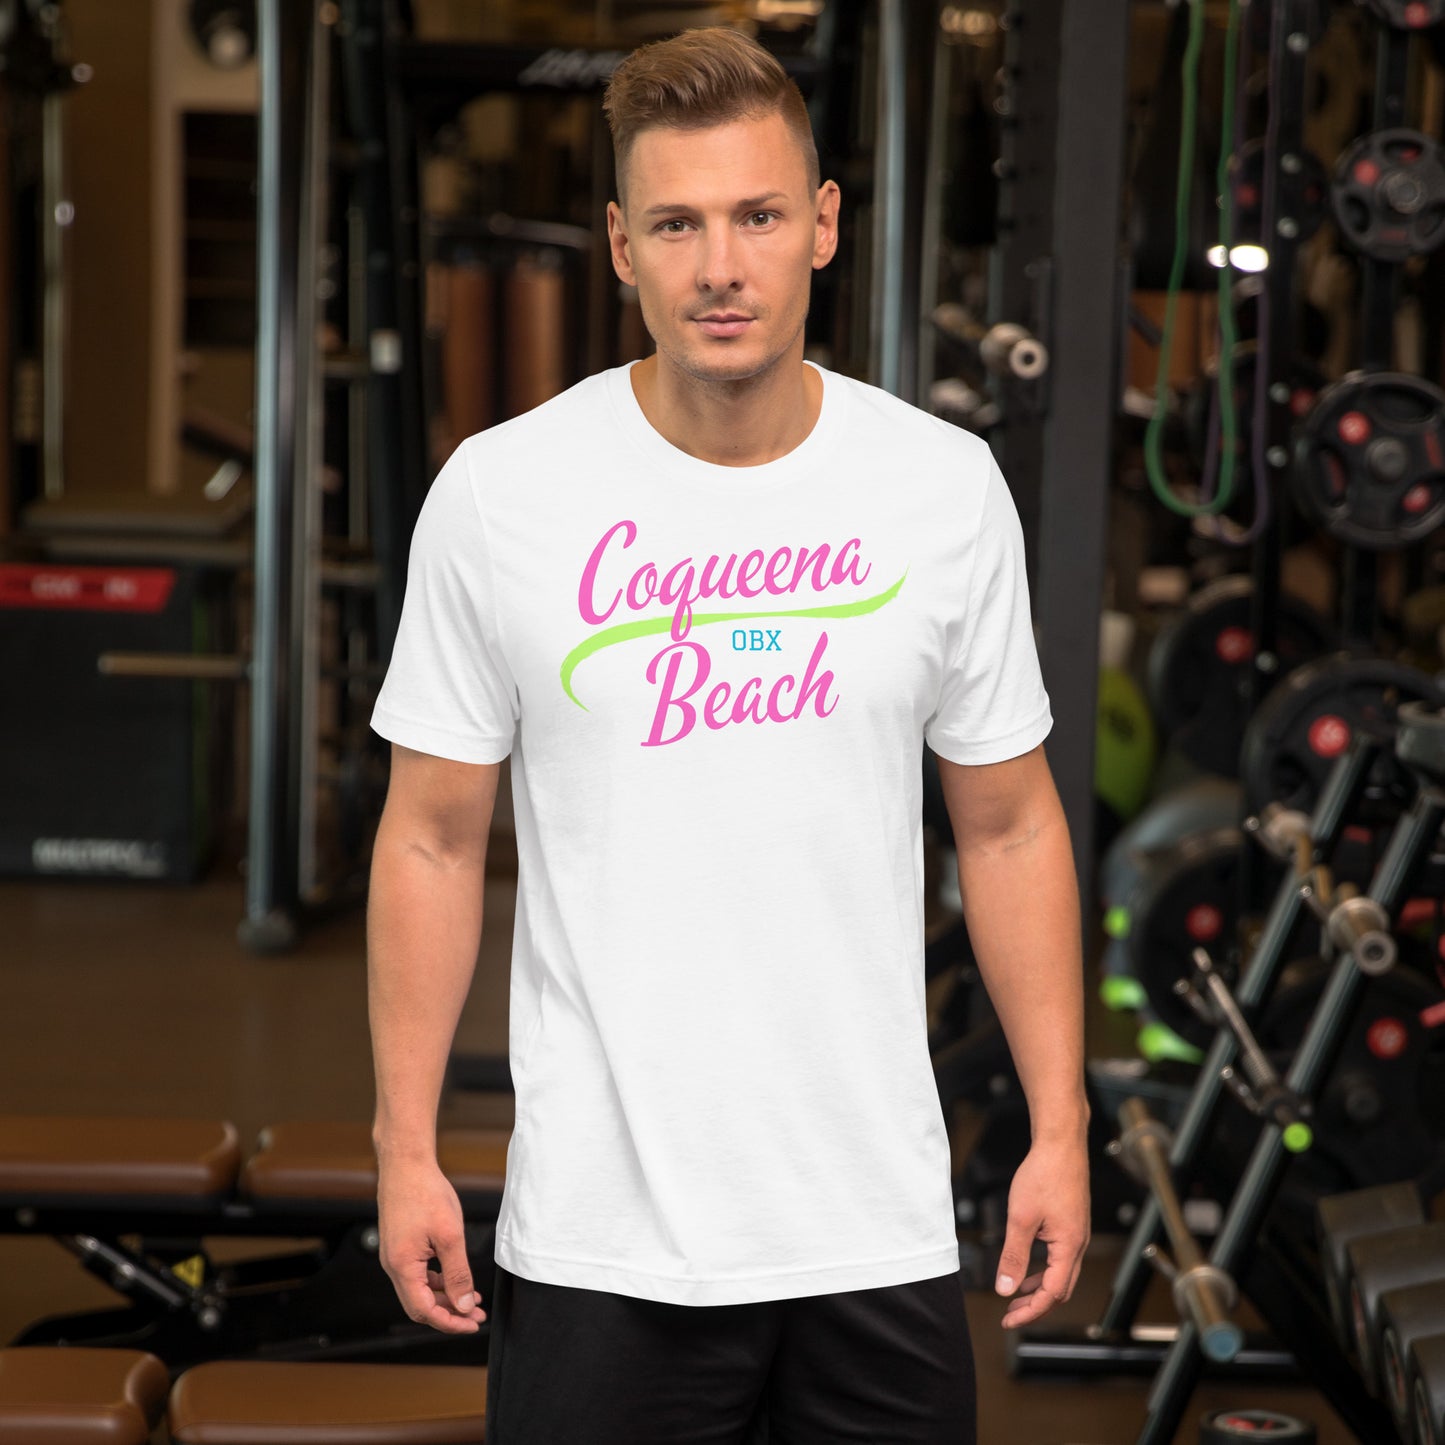 "Coqueena Beach" unisex t-shirt